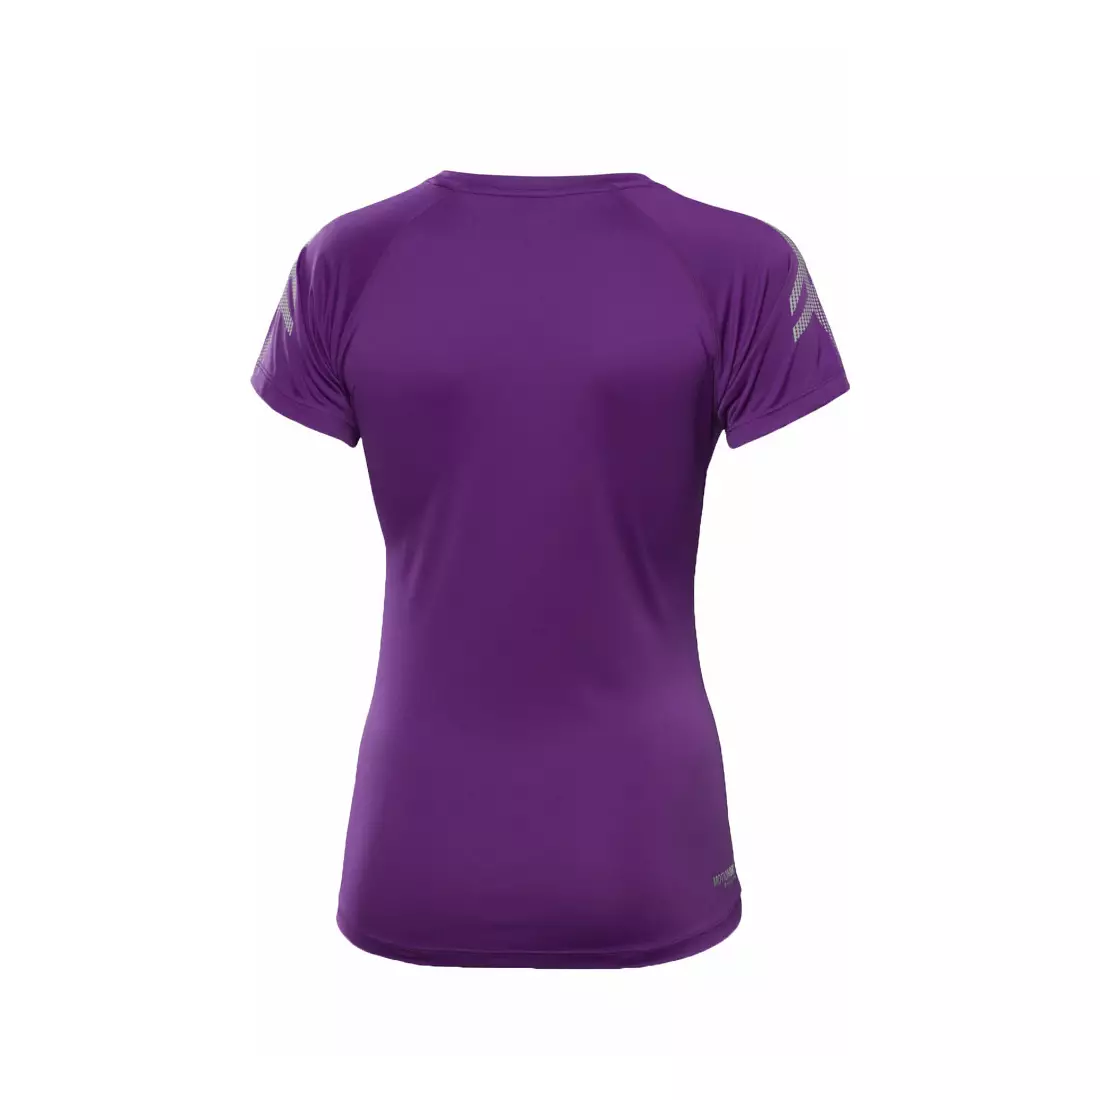 ASICS RUN 339907-0692 TIGER - women's T-shirt, color: Purple